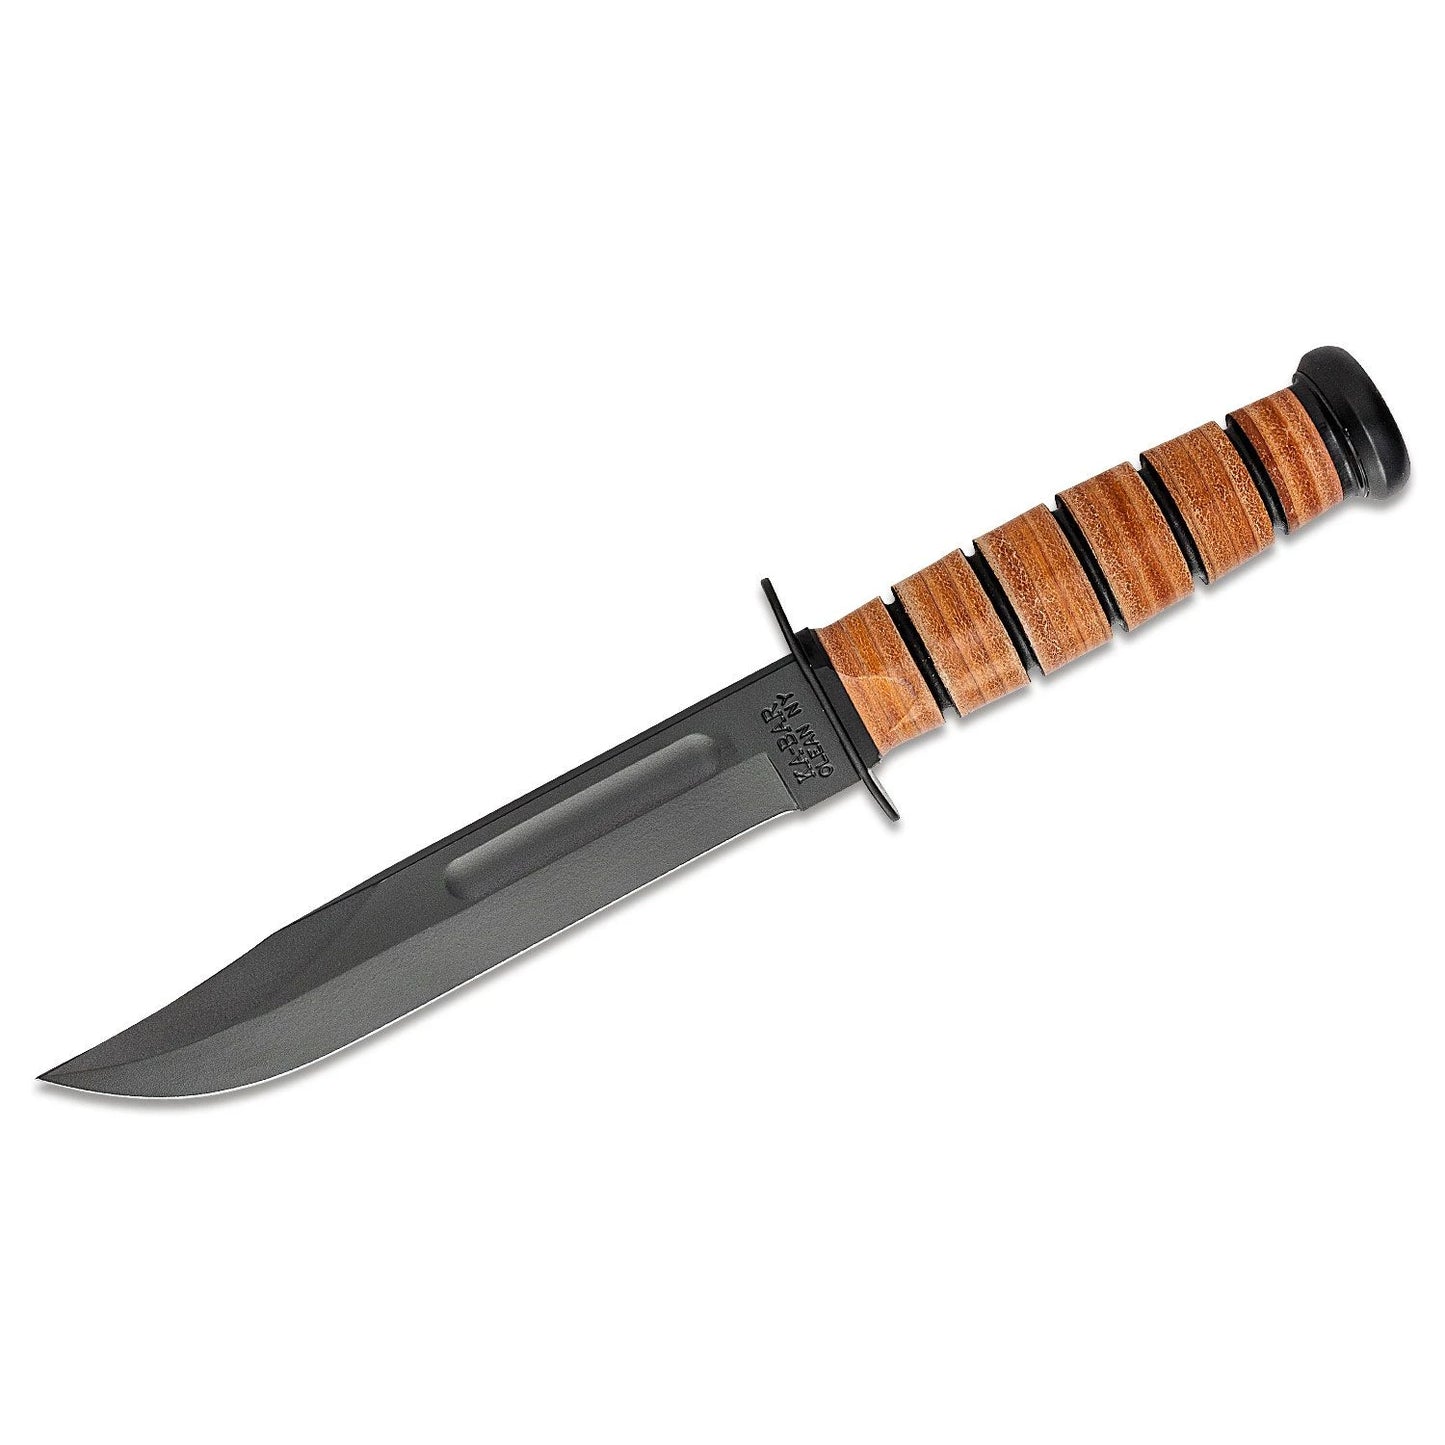 KA-BAR - USMC Full-size - Straight Edge Knife